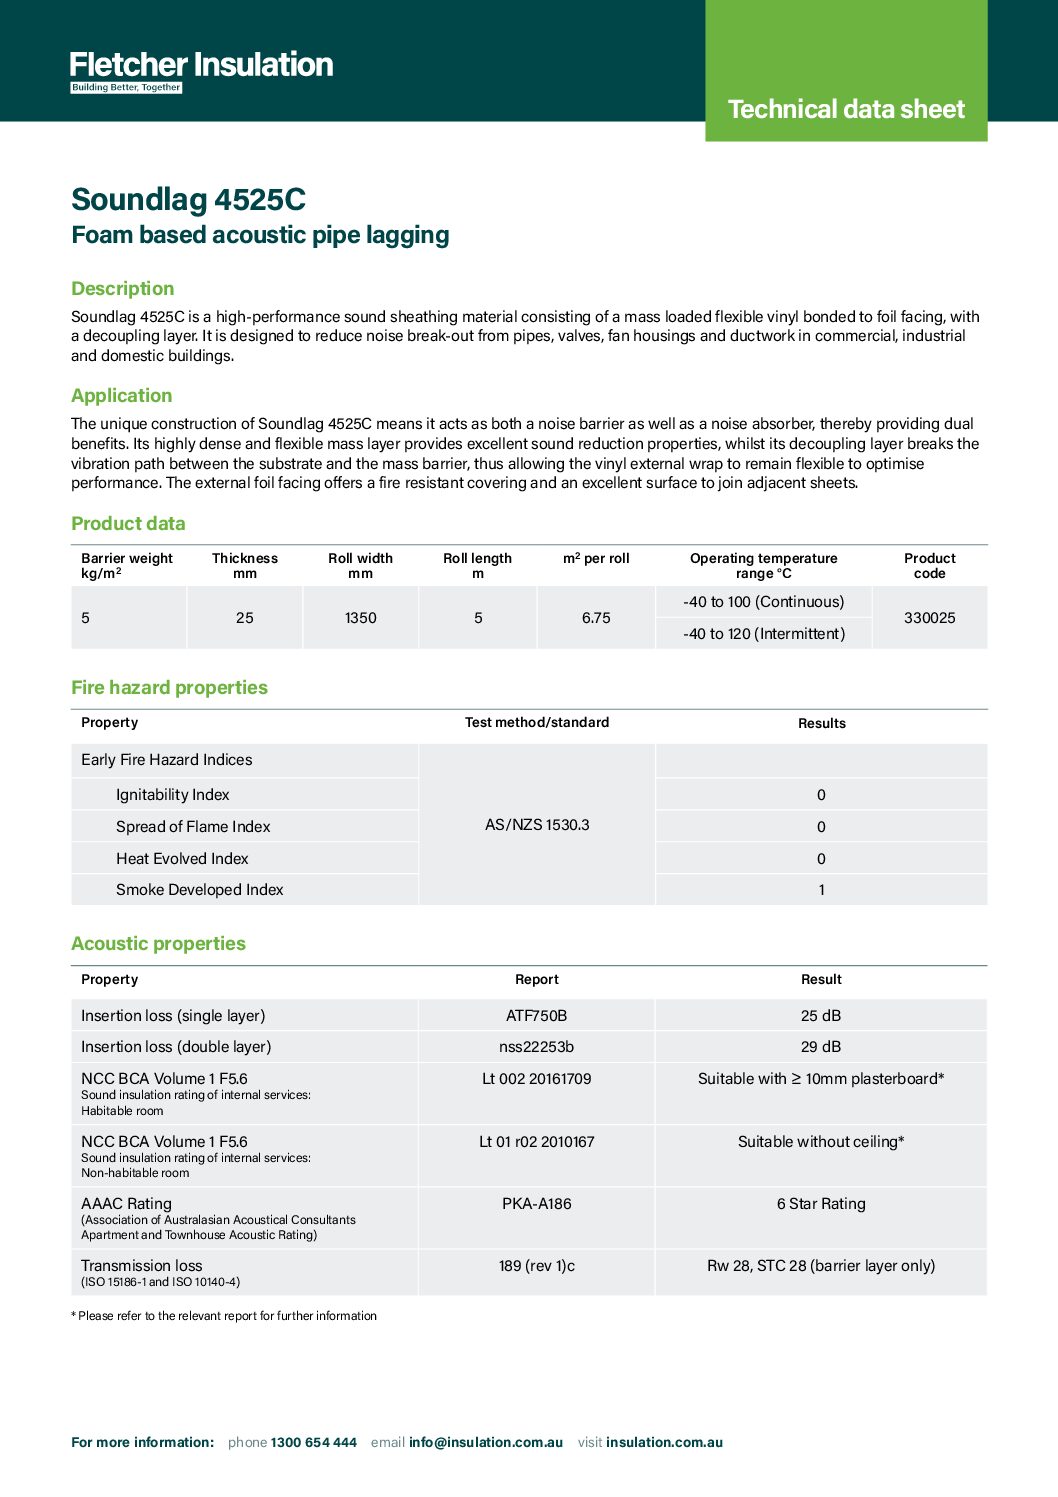 Soundlag 4525C Pipe Acoustic Lagging Technical Data Sheet